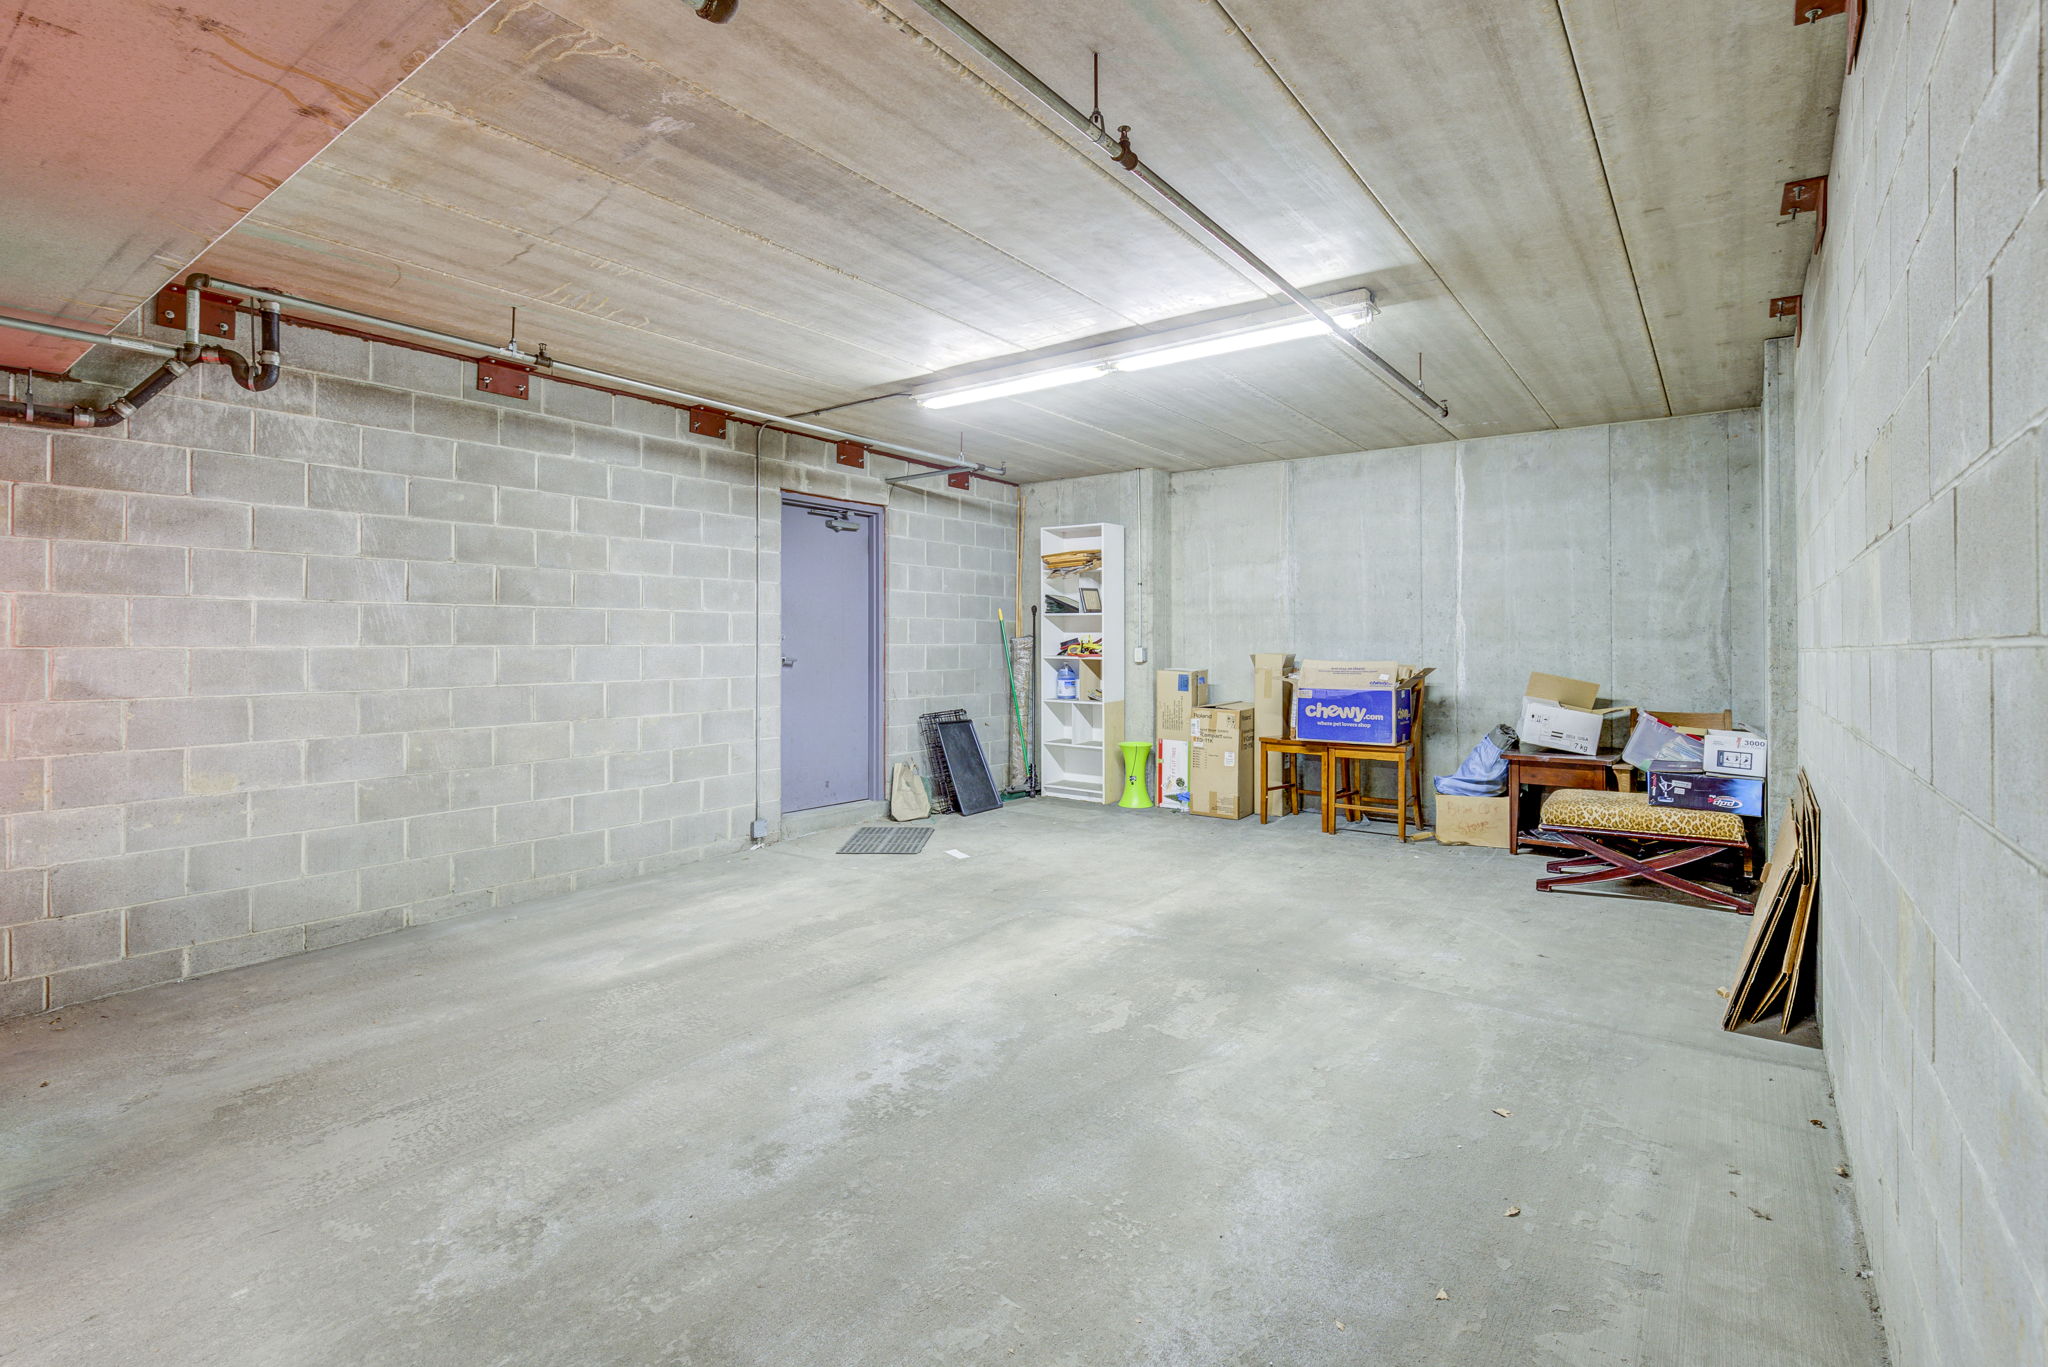 Heated garage and storage